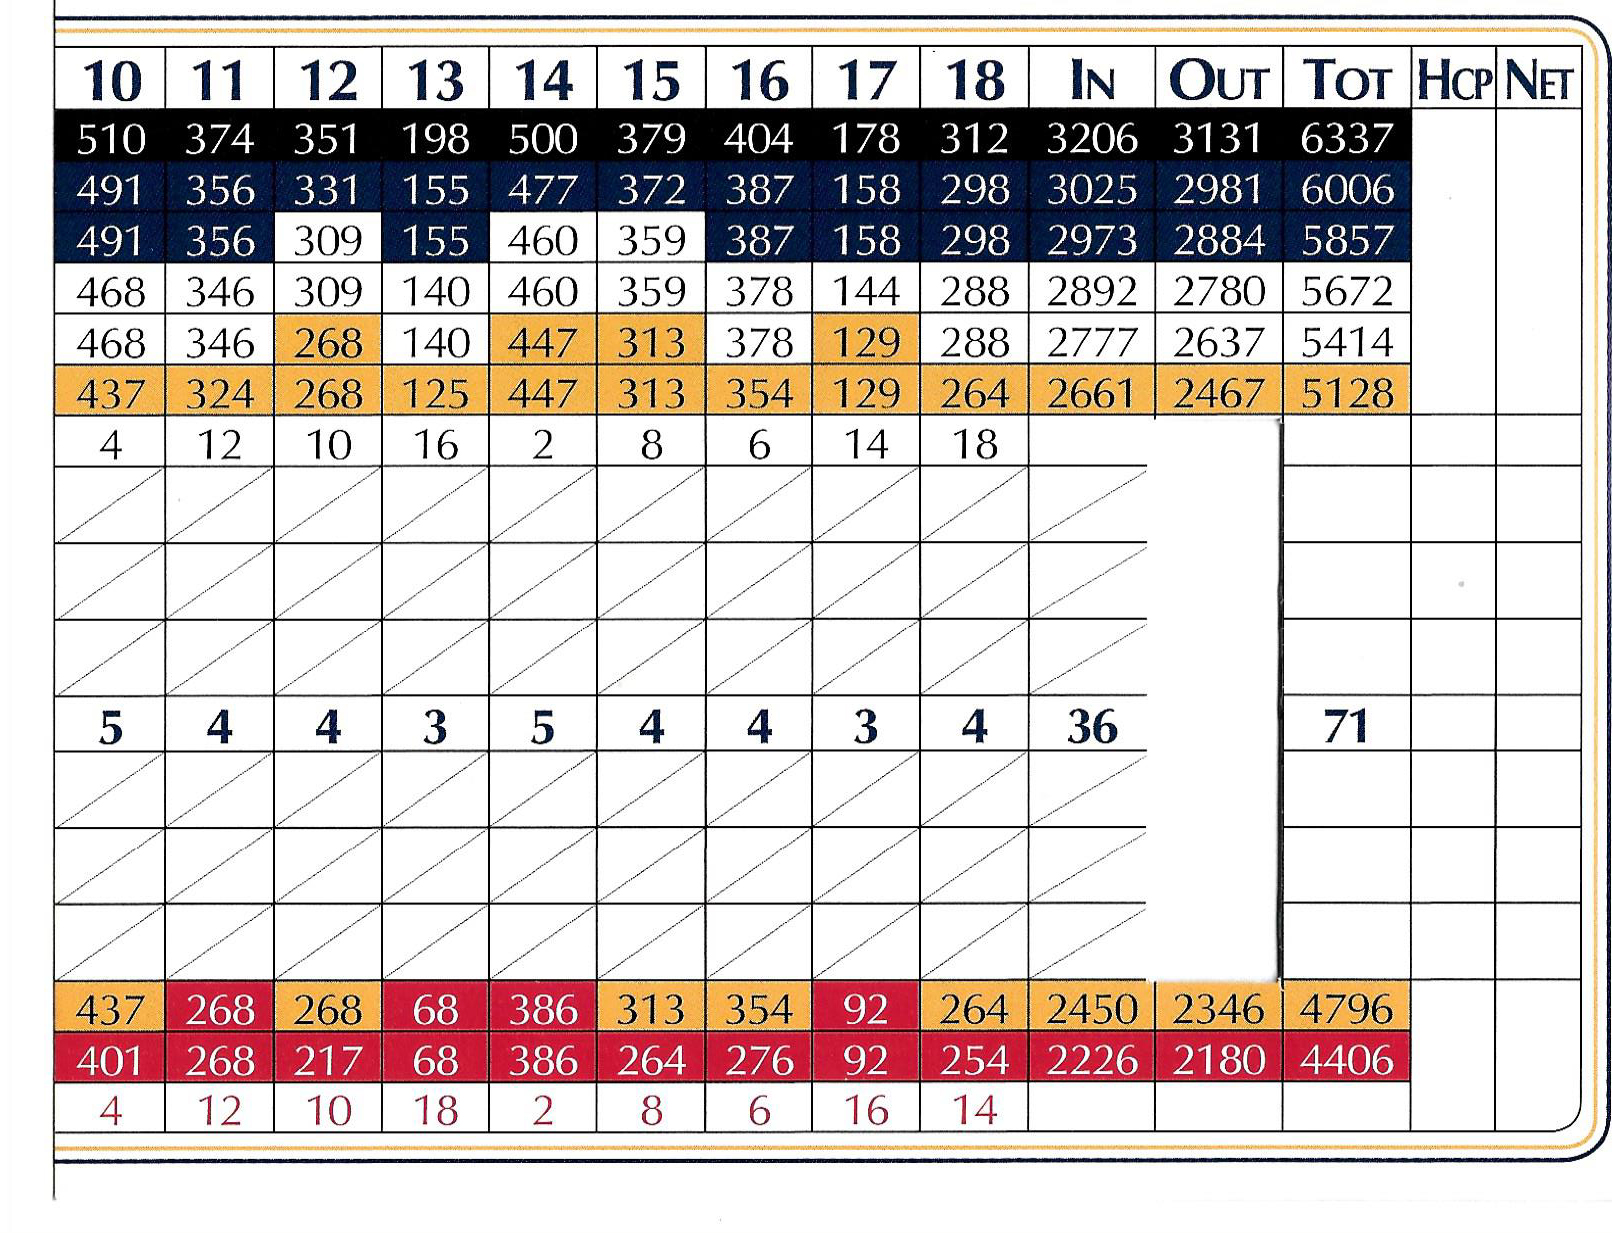 Scorecard - Westlake Golf and Country Club